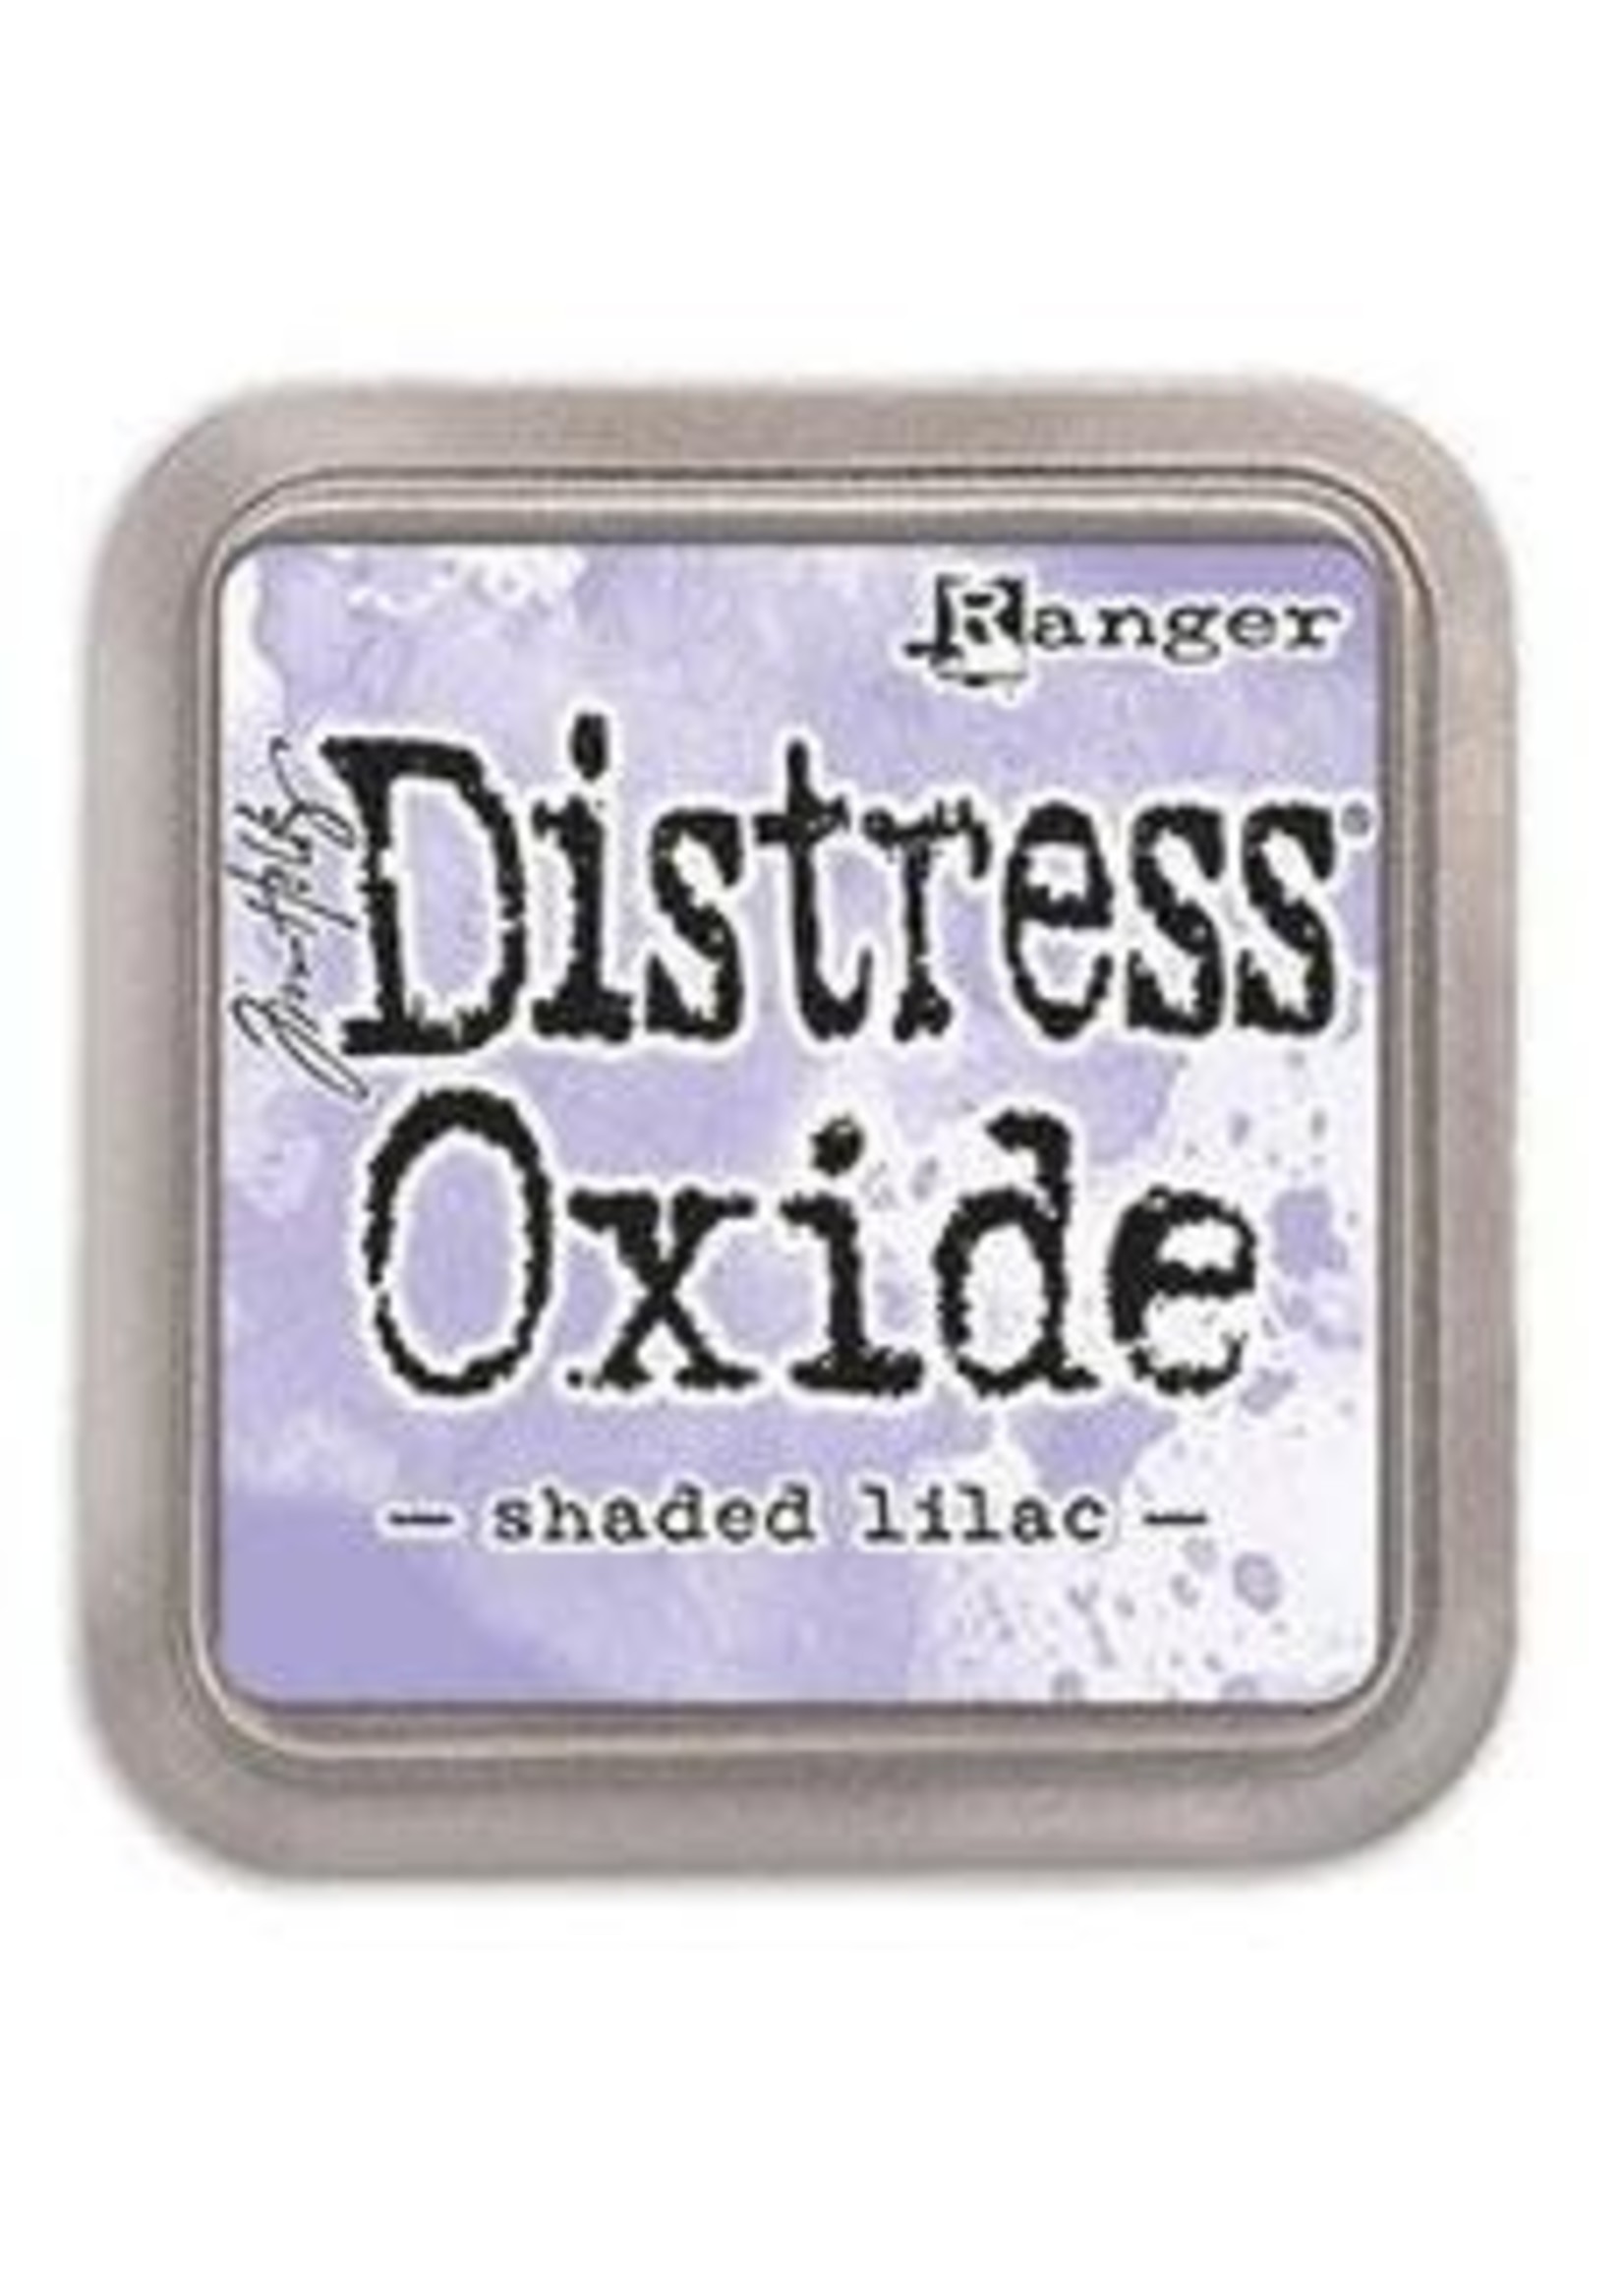 RANGER Distress Oxide Shaded Lilac